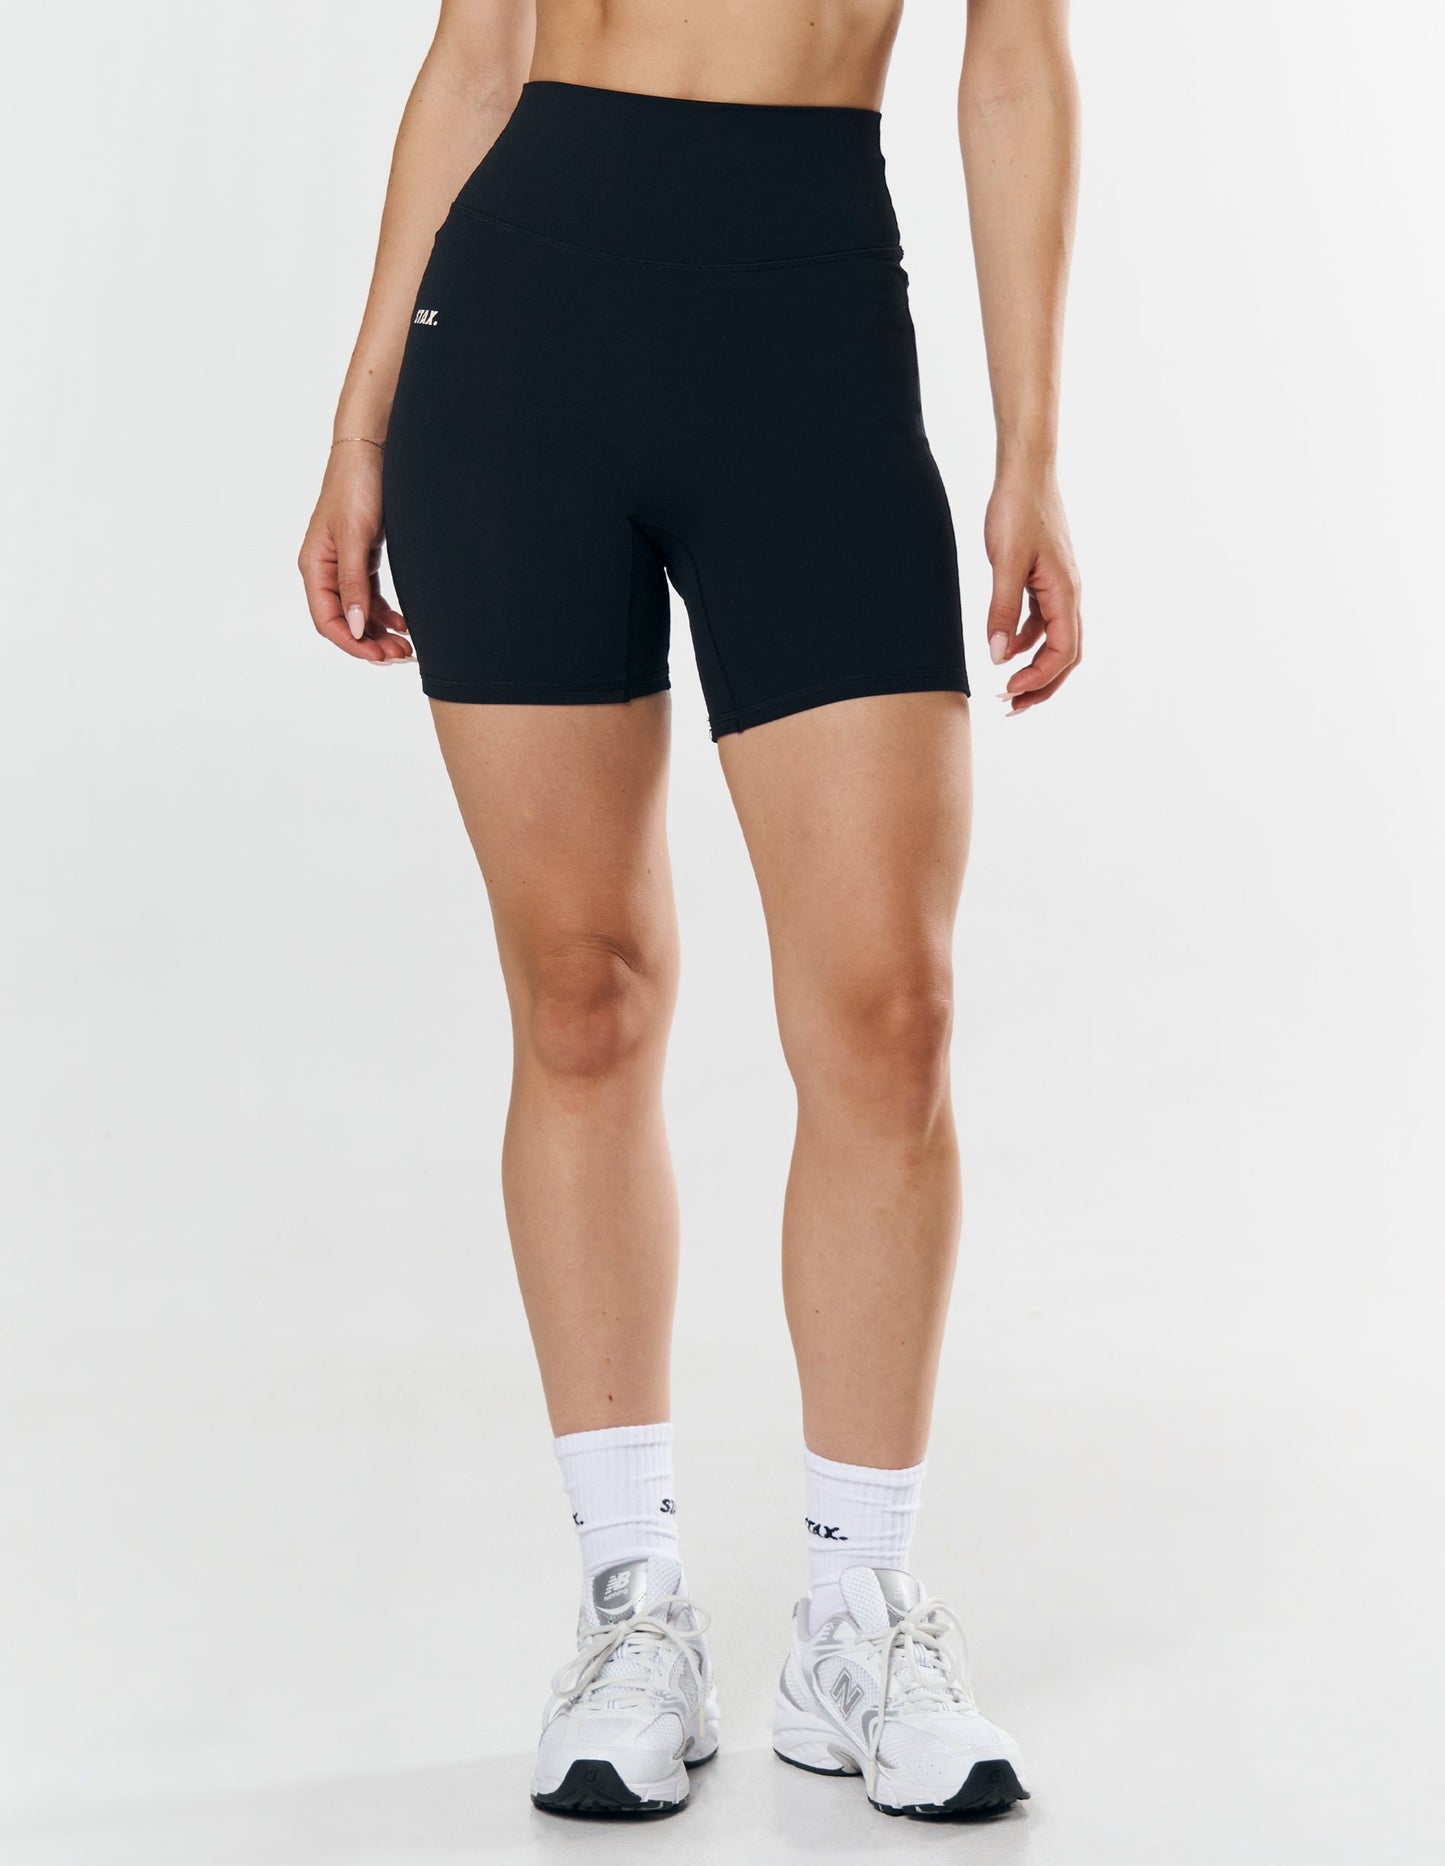 Kic Midi Bike Shorts - Black